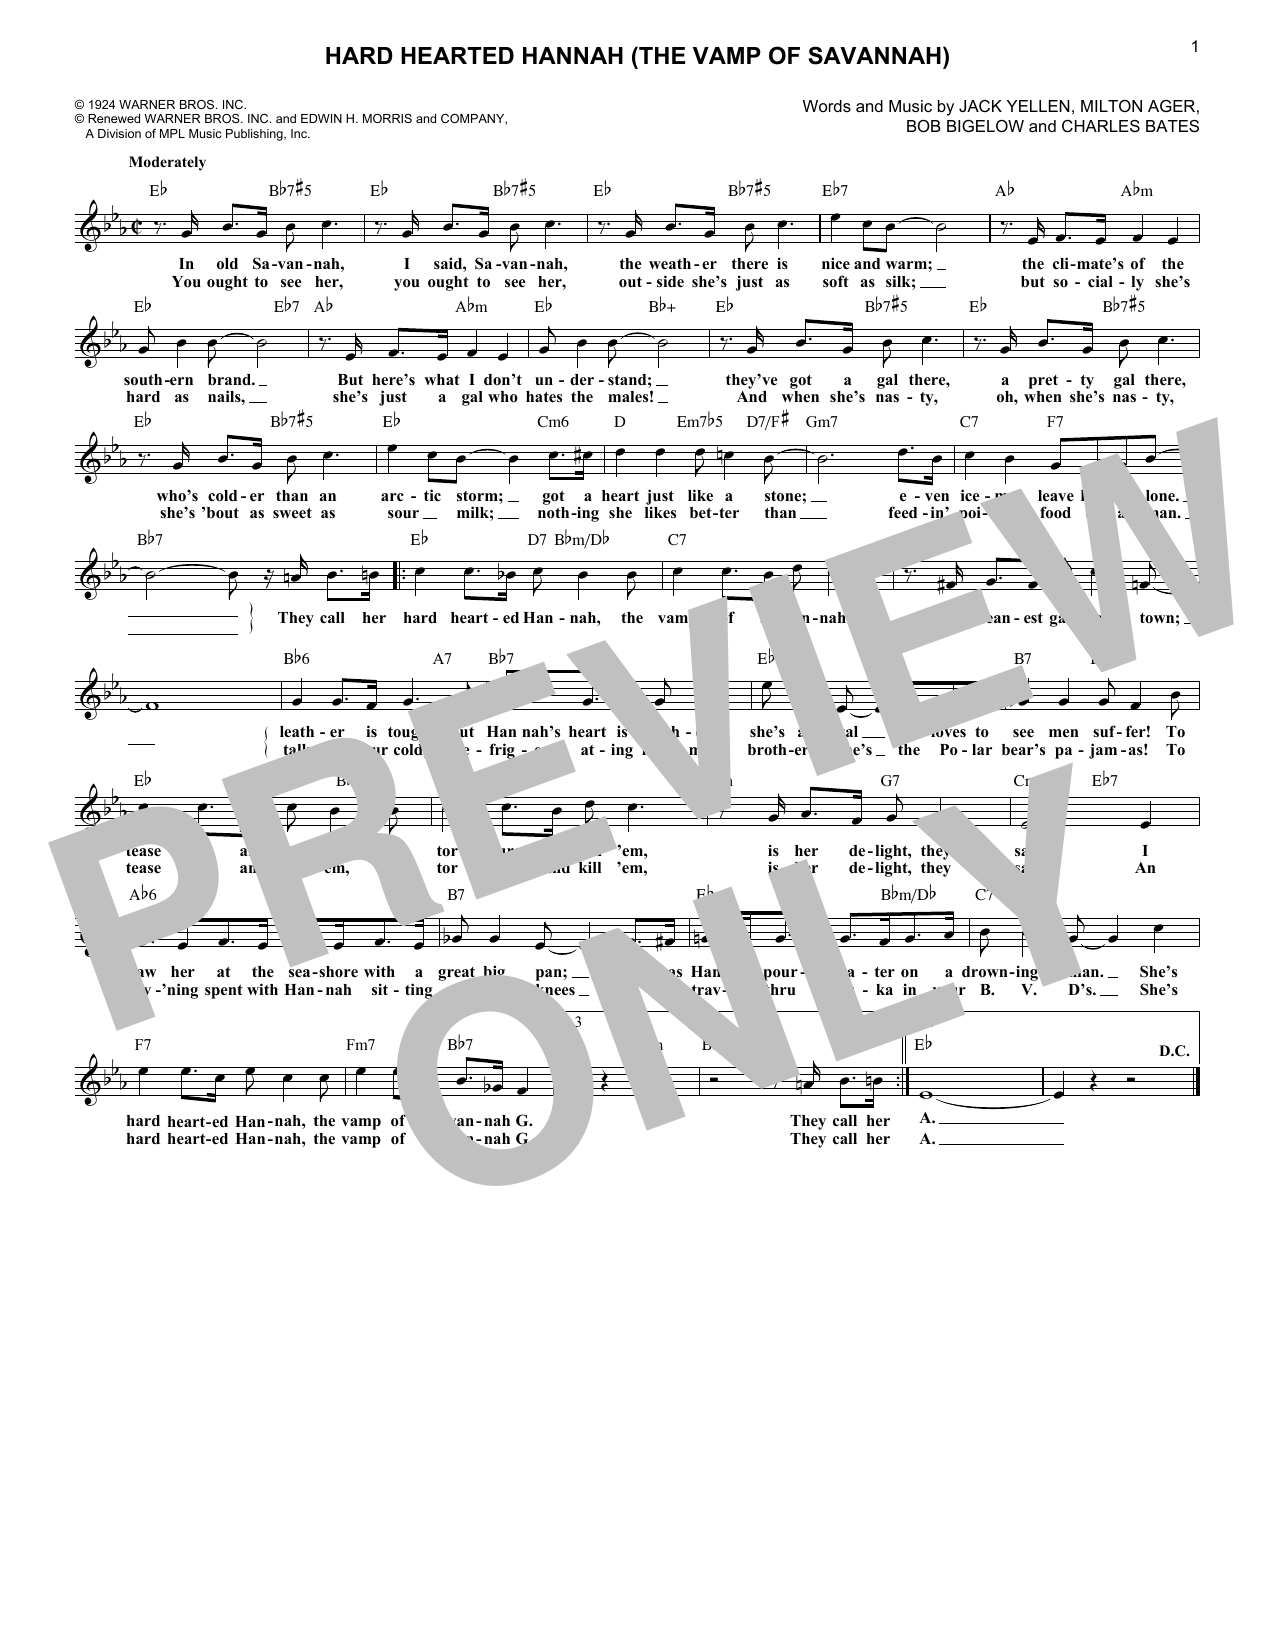 Charles Bates Hard Hearted Hannah (The Vamp Of Savannah) sheet music notes and chords arranged for Lead Sheet / Fake Book